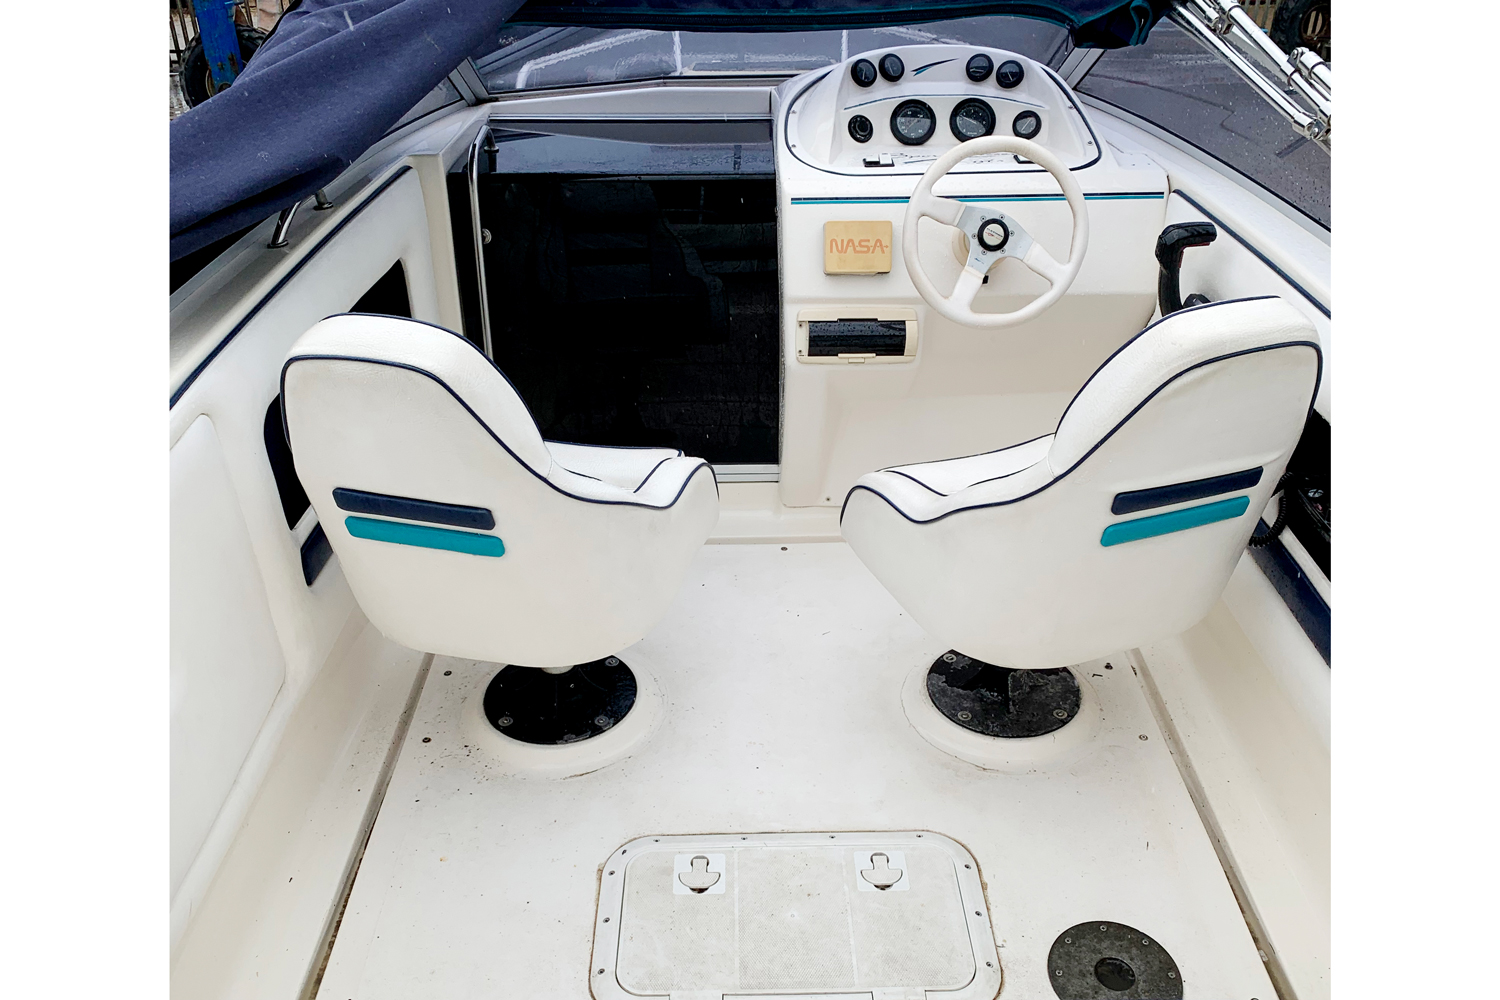 Fletcher Sportscruiser 18 GTS - helm and copilot seat